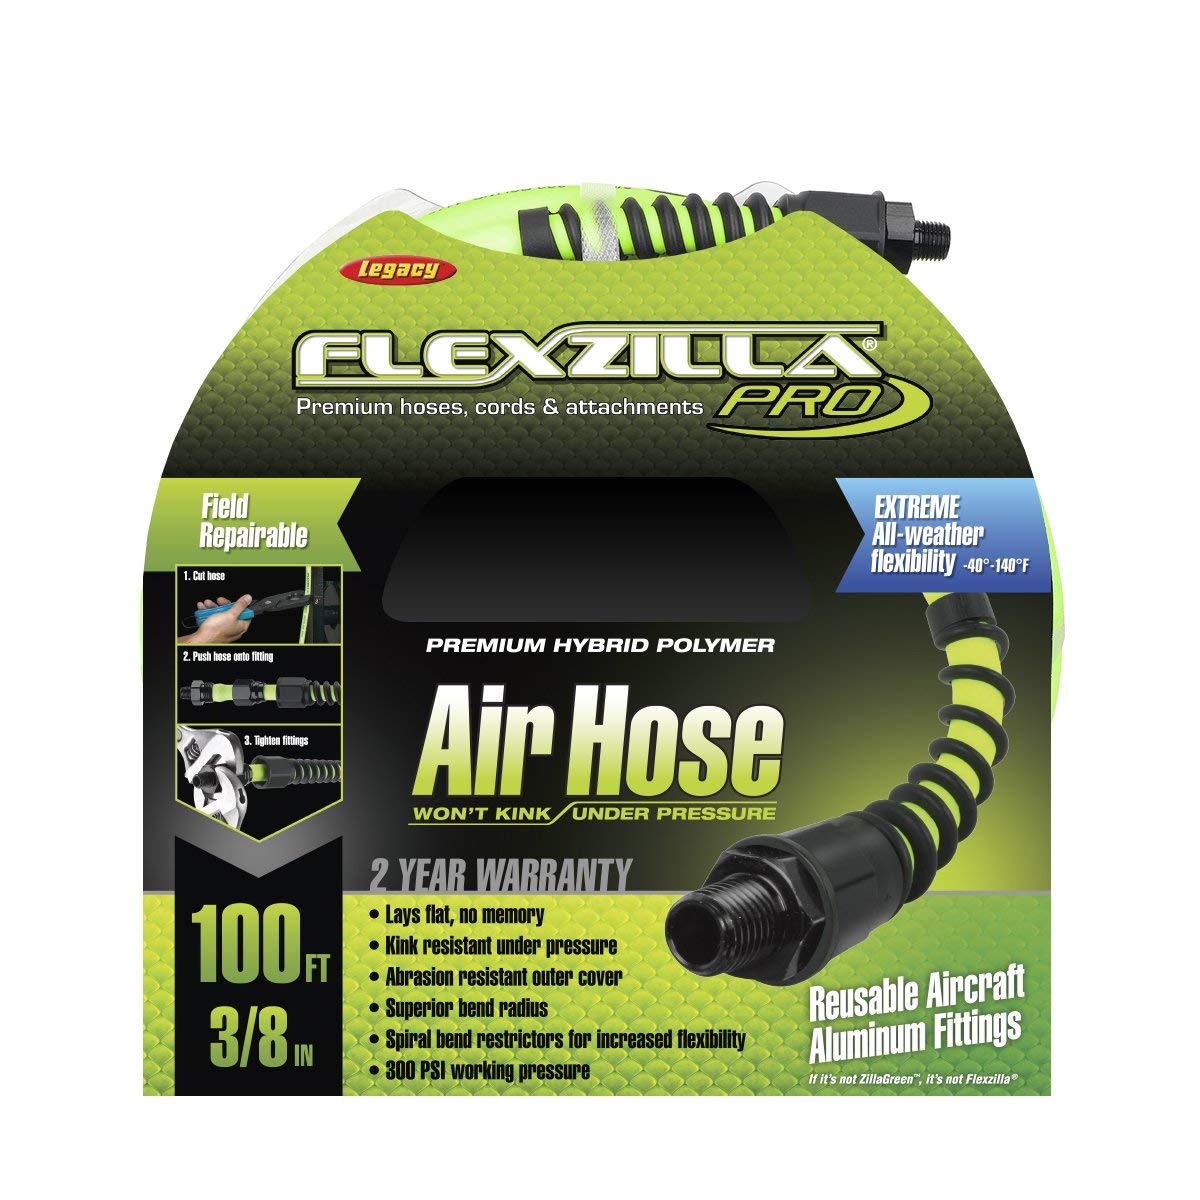 Flexzilla Pro Field Repairable 3/8" x 100' Air Hose